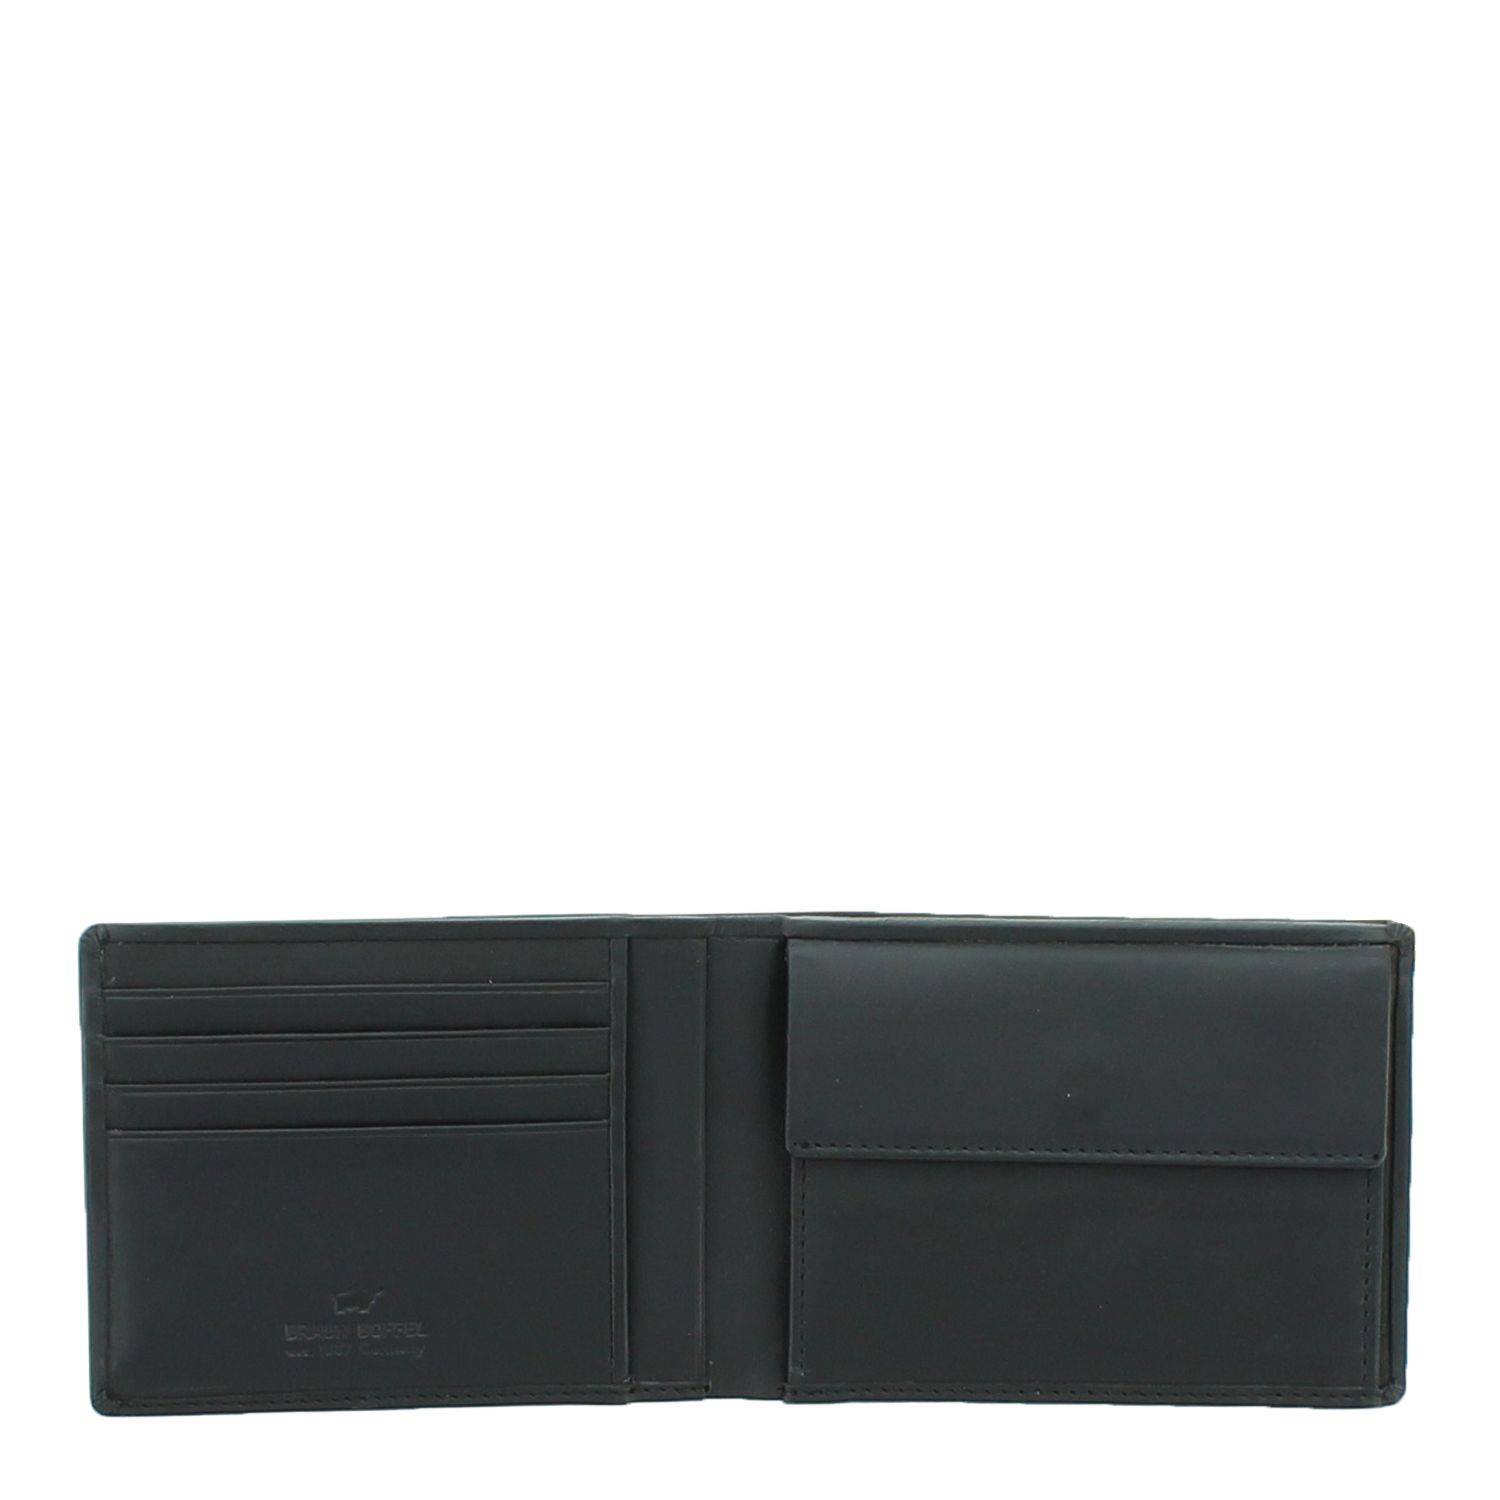 Сумка Braun Buffel LUZERN Q Wallet 14032, цвет черный, размер ONE SIZE - фото 2